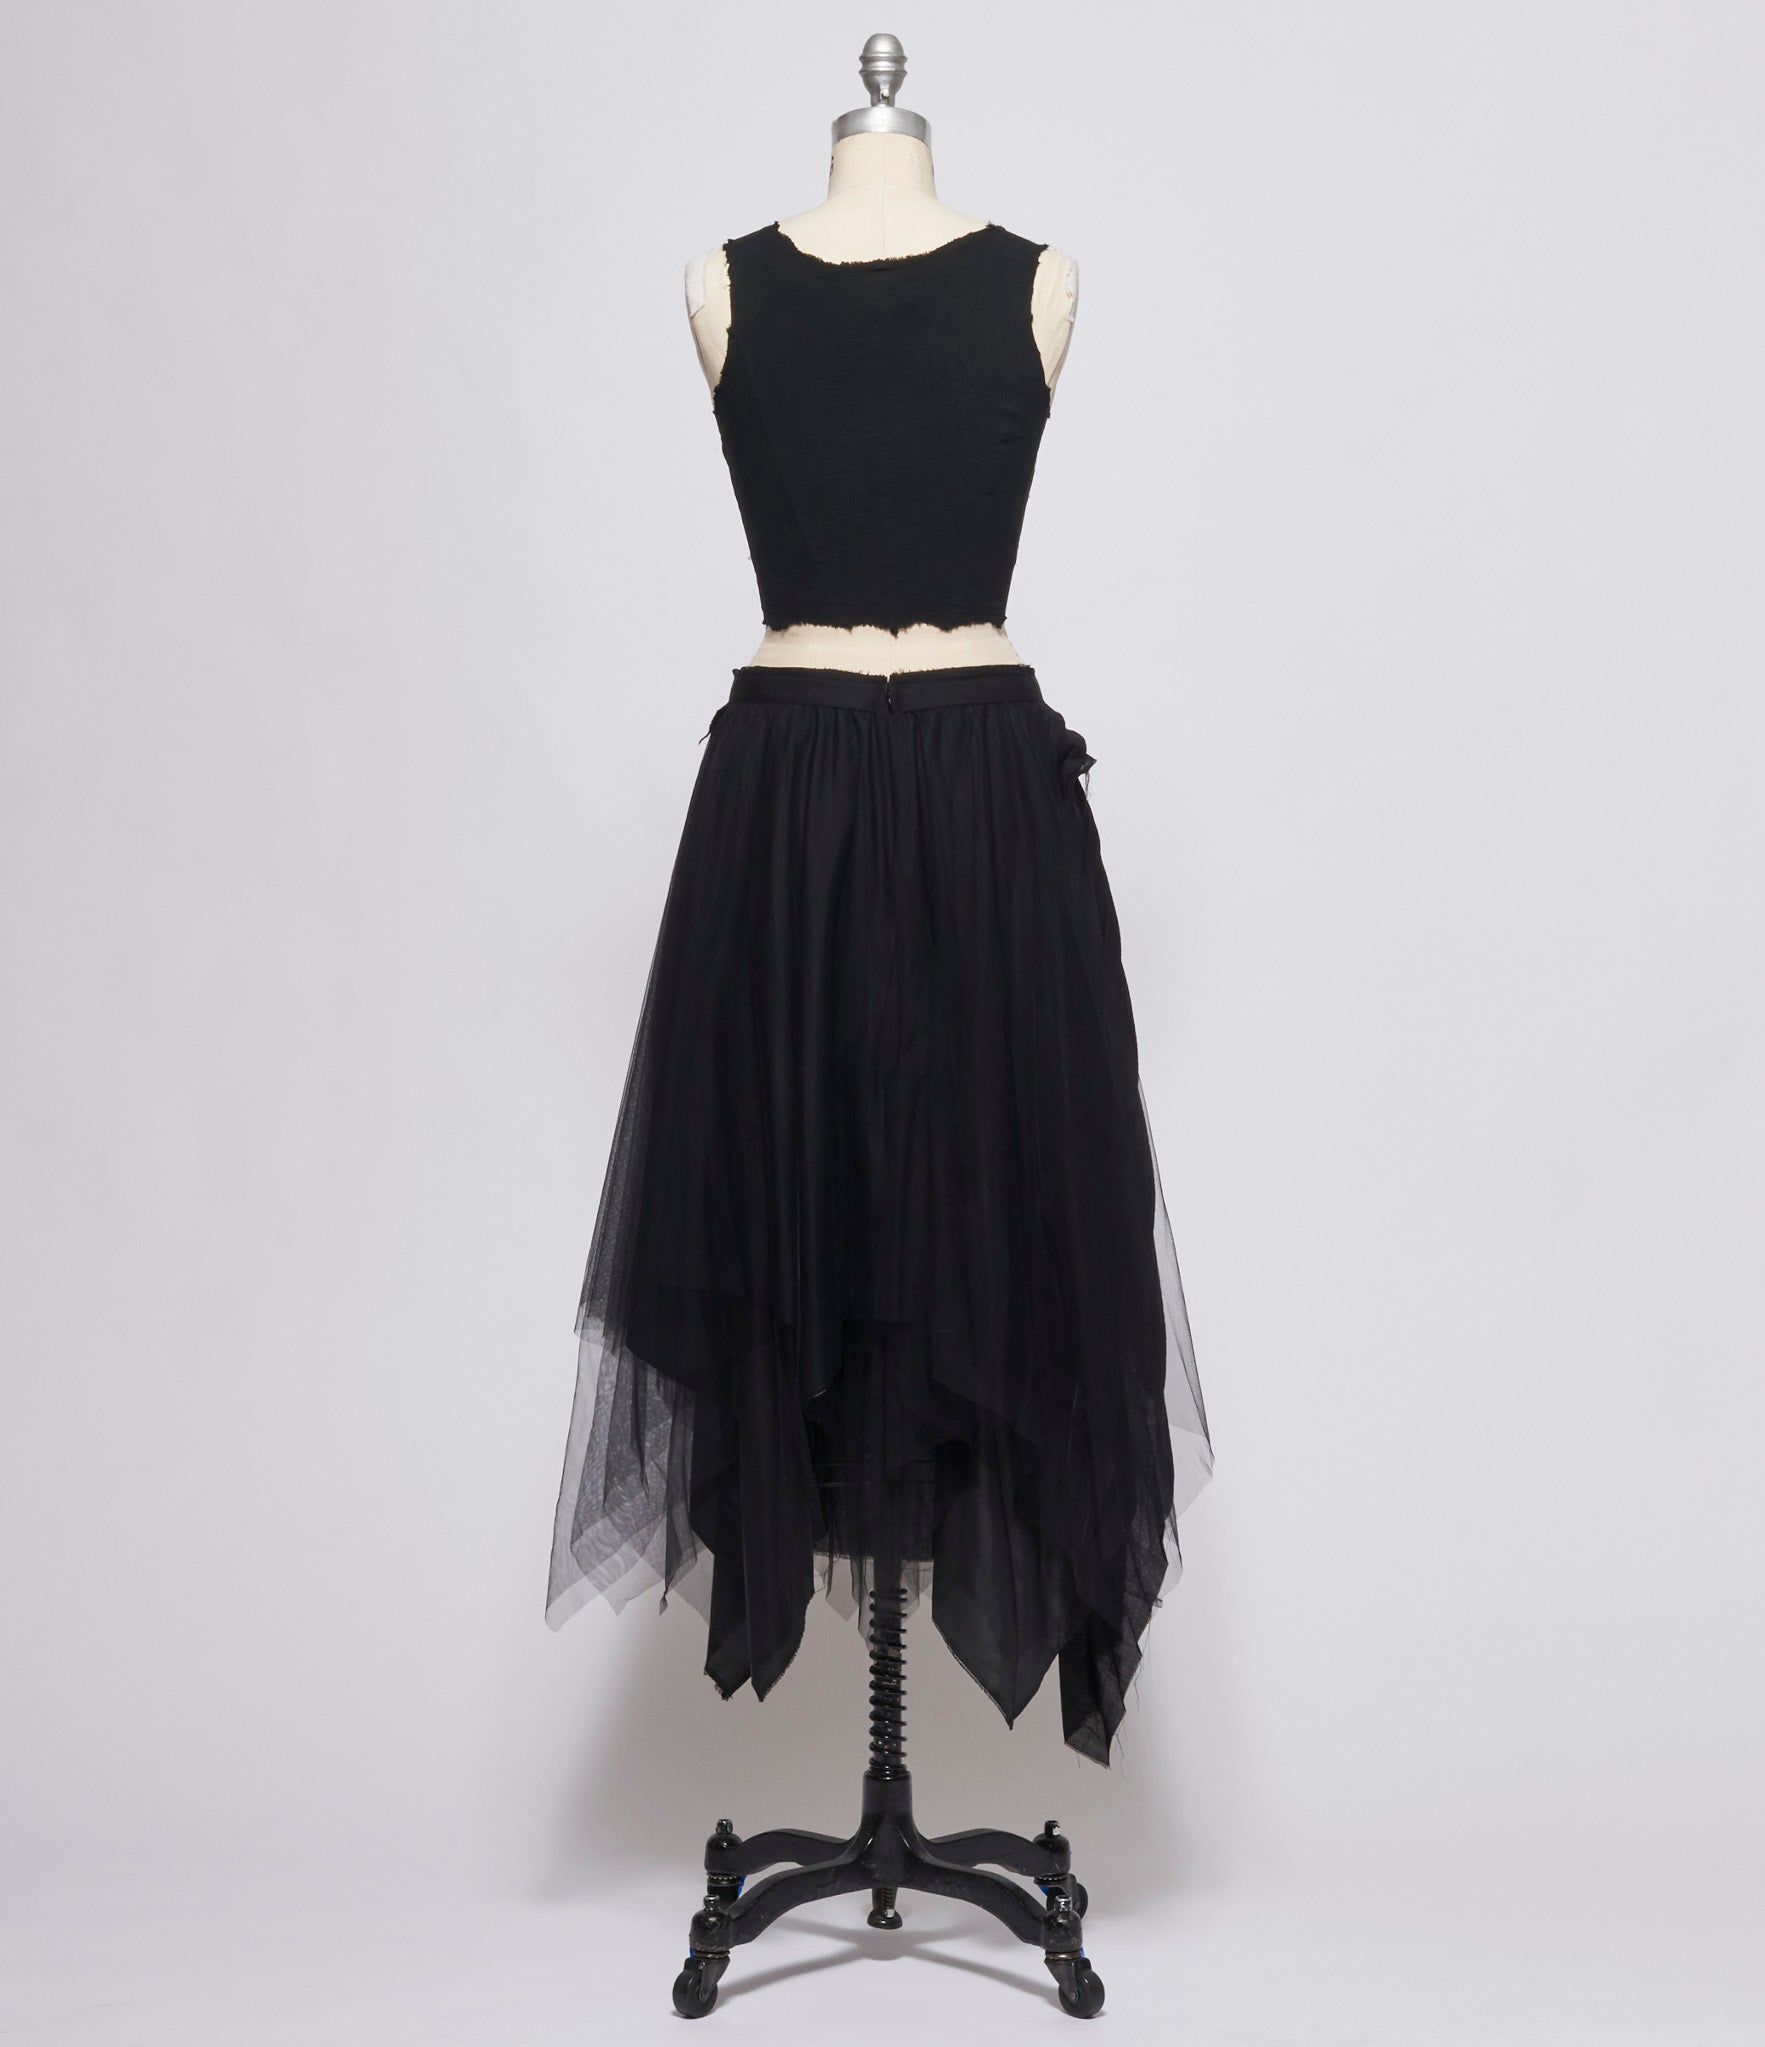 62% OFF on KASSUALLY Women Stylish Black Floral Tulle Dress on Myntra |  PaisaWapas.com